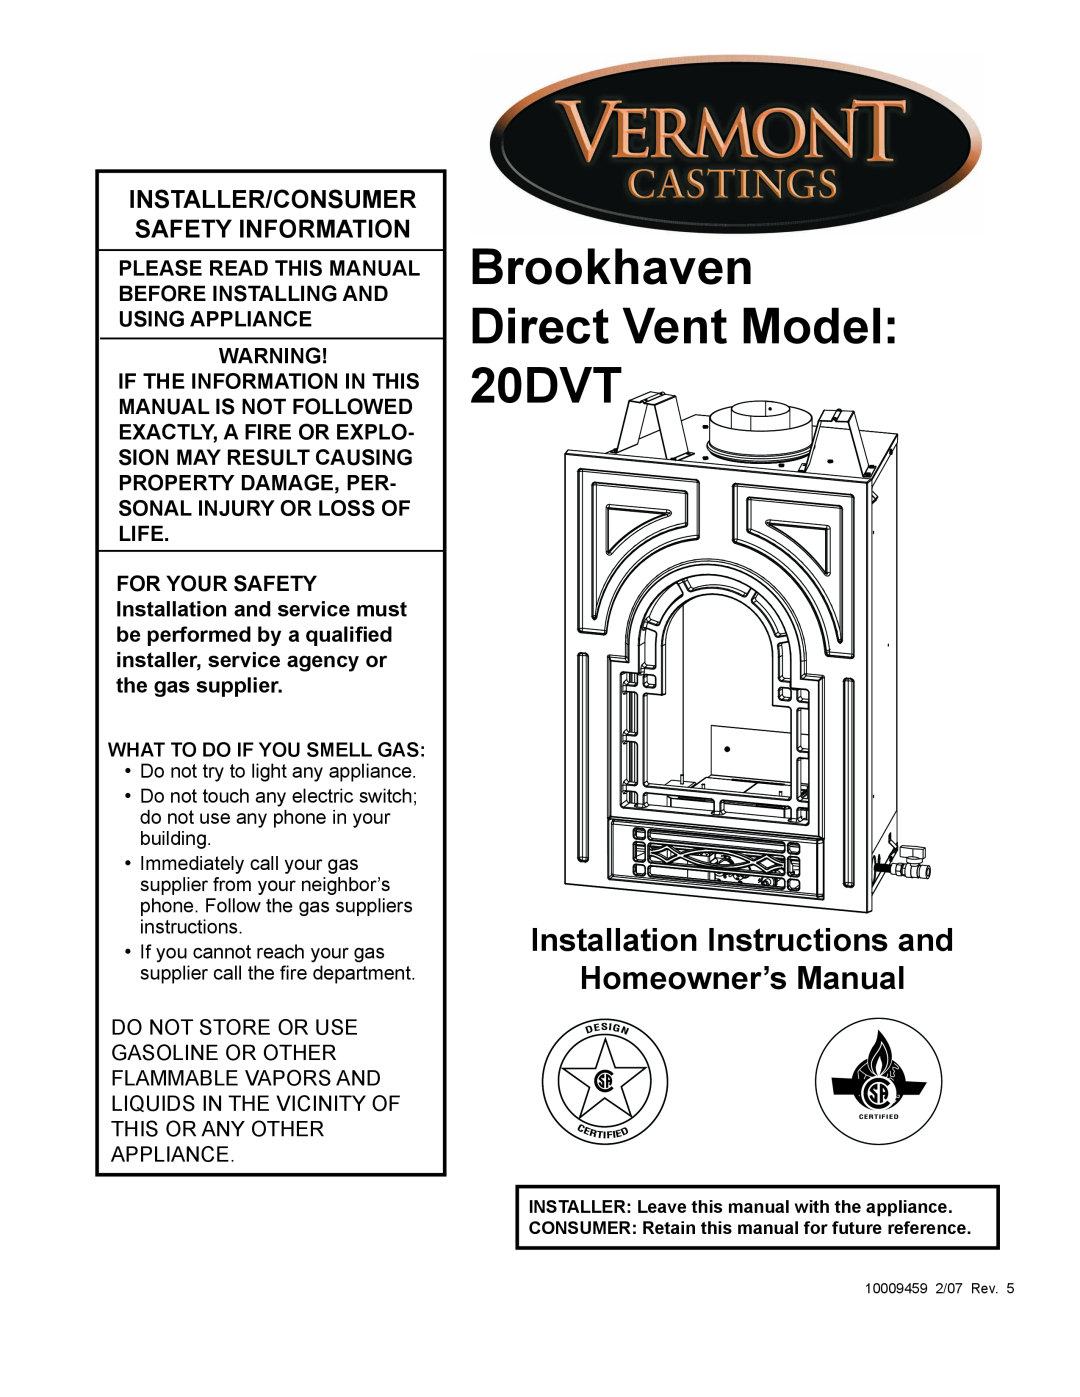 Vermont Casting installation instructions Brookhaven Direct Vent Model 20DVT, Installer/Consumer Safety Information 